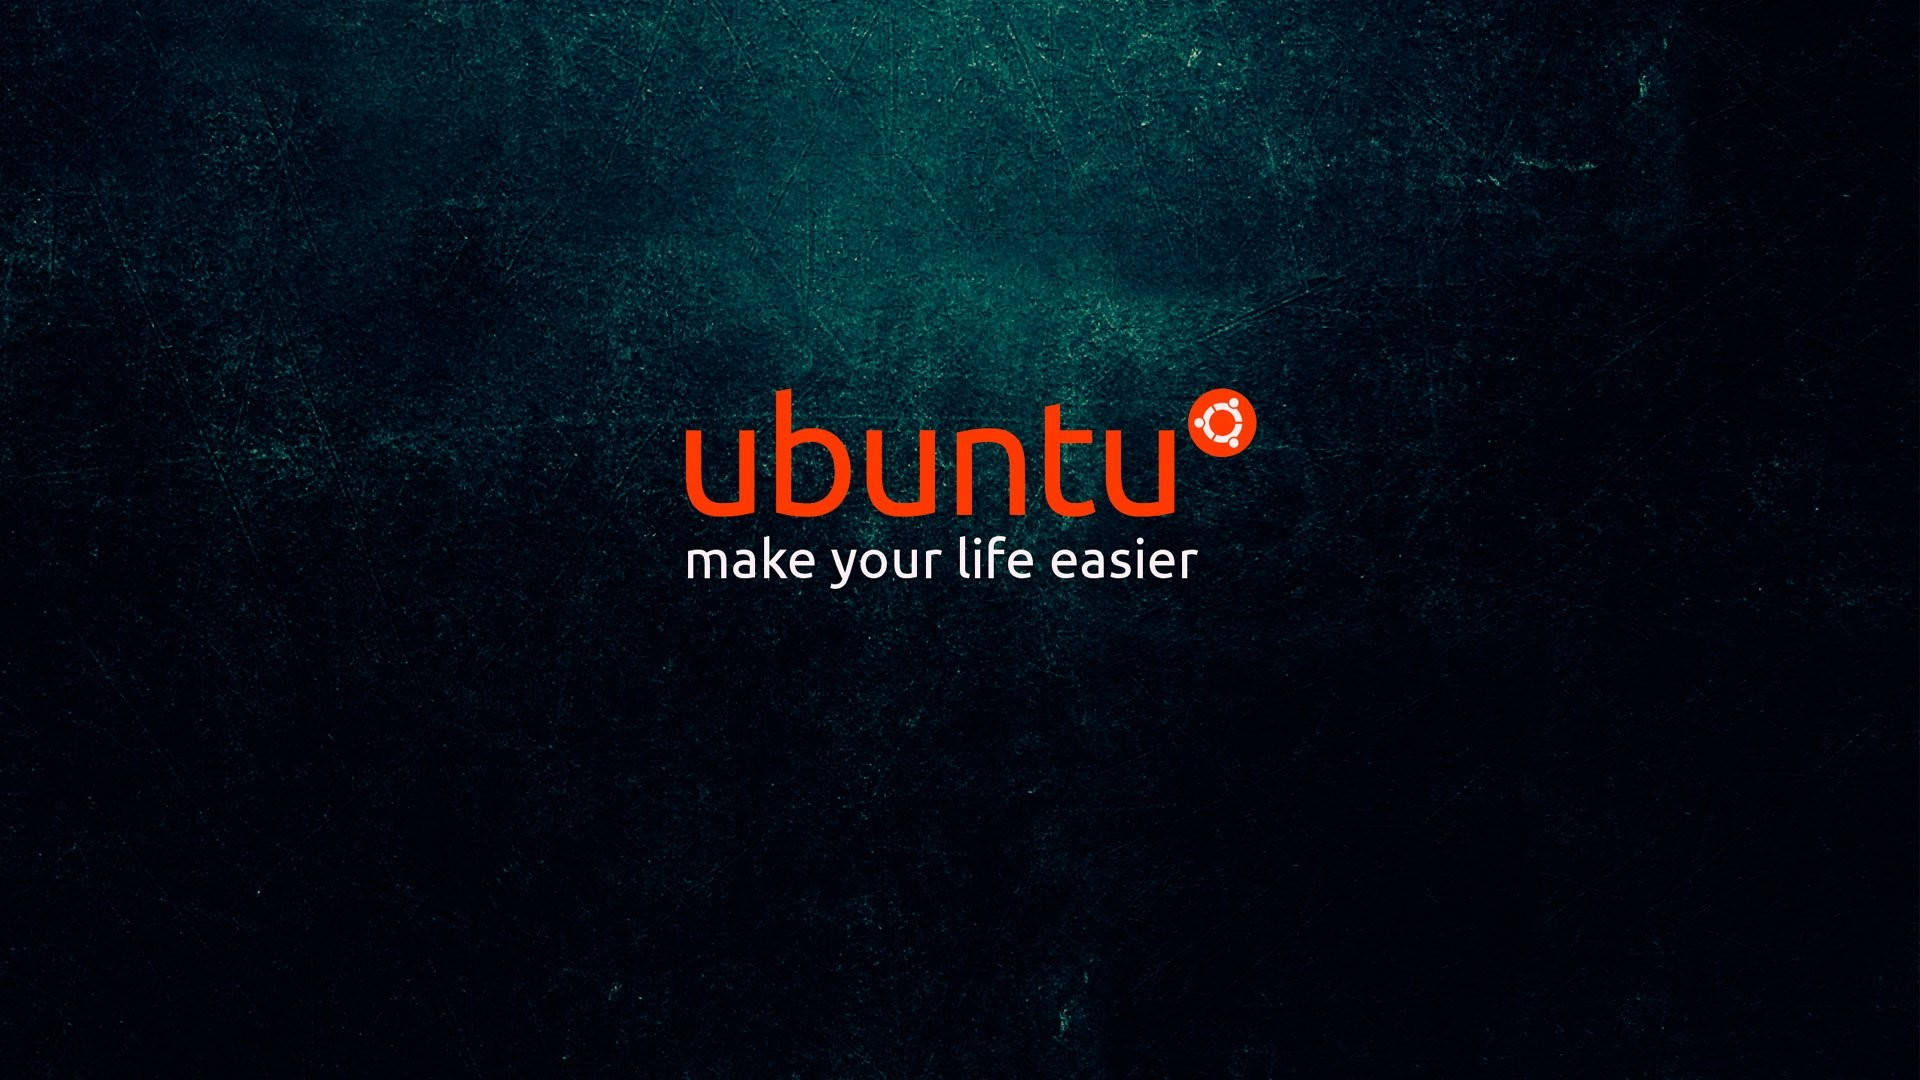 Minimalist Ubuntu Linux Wallpaper